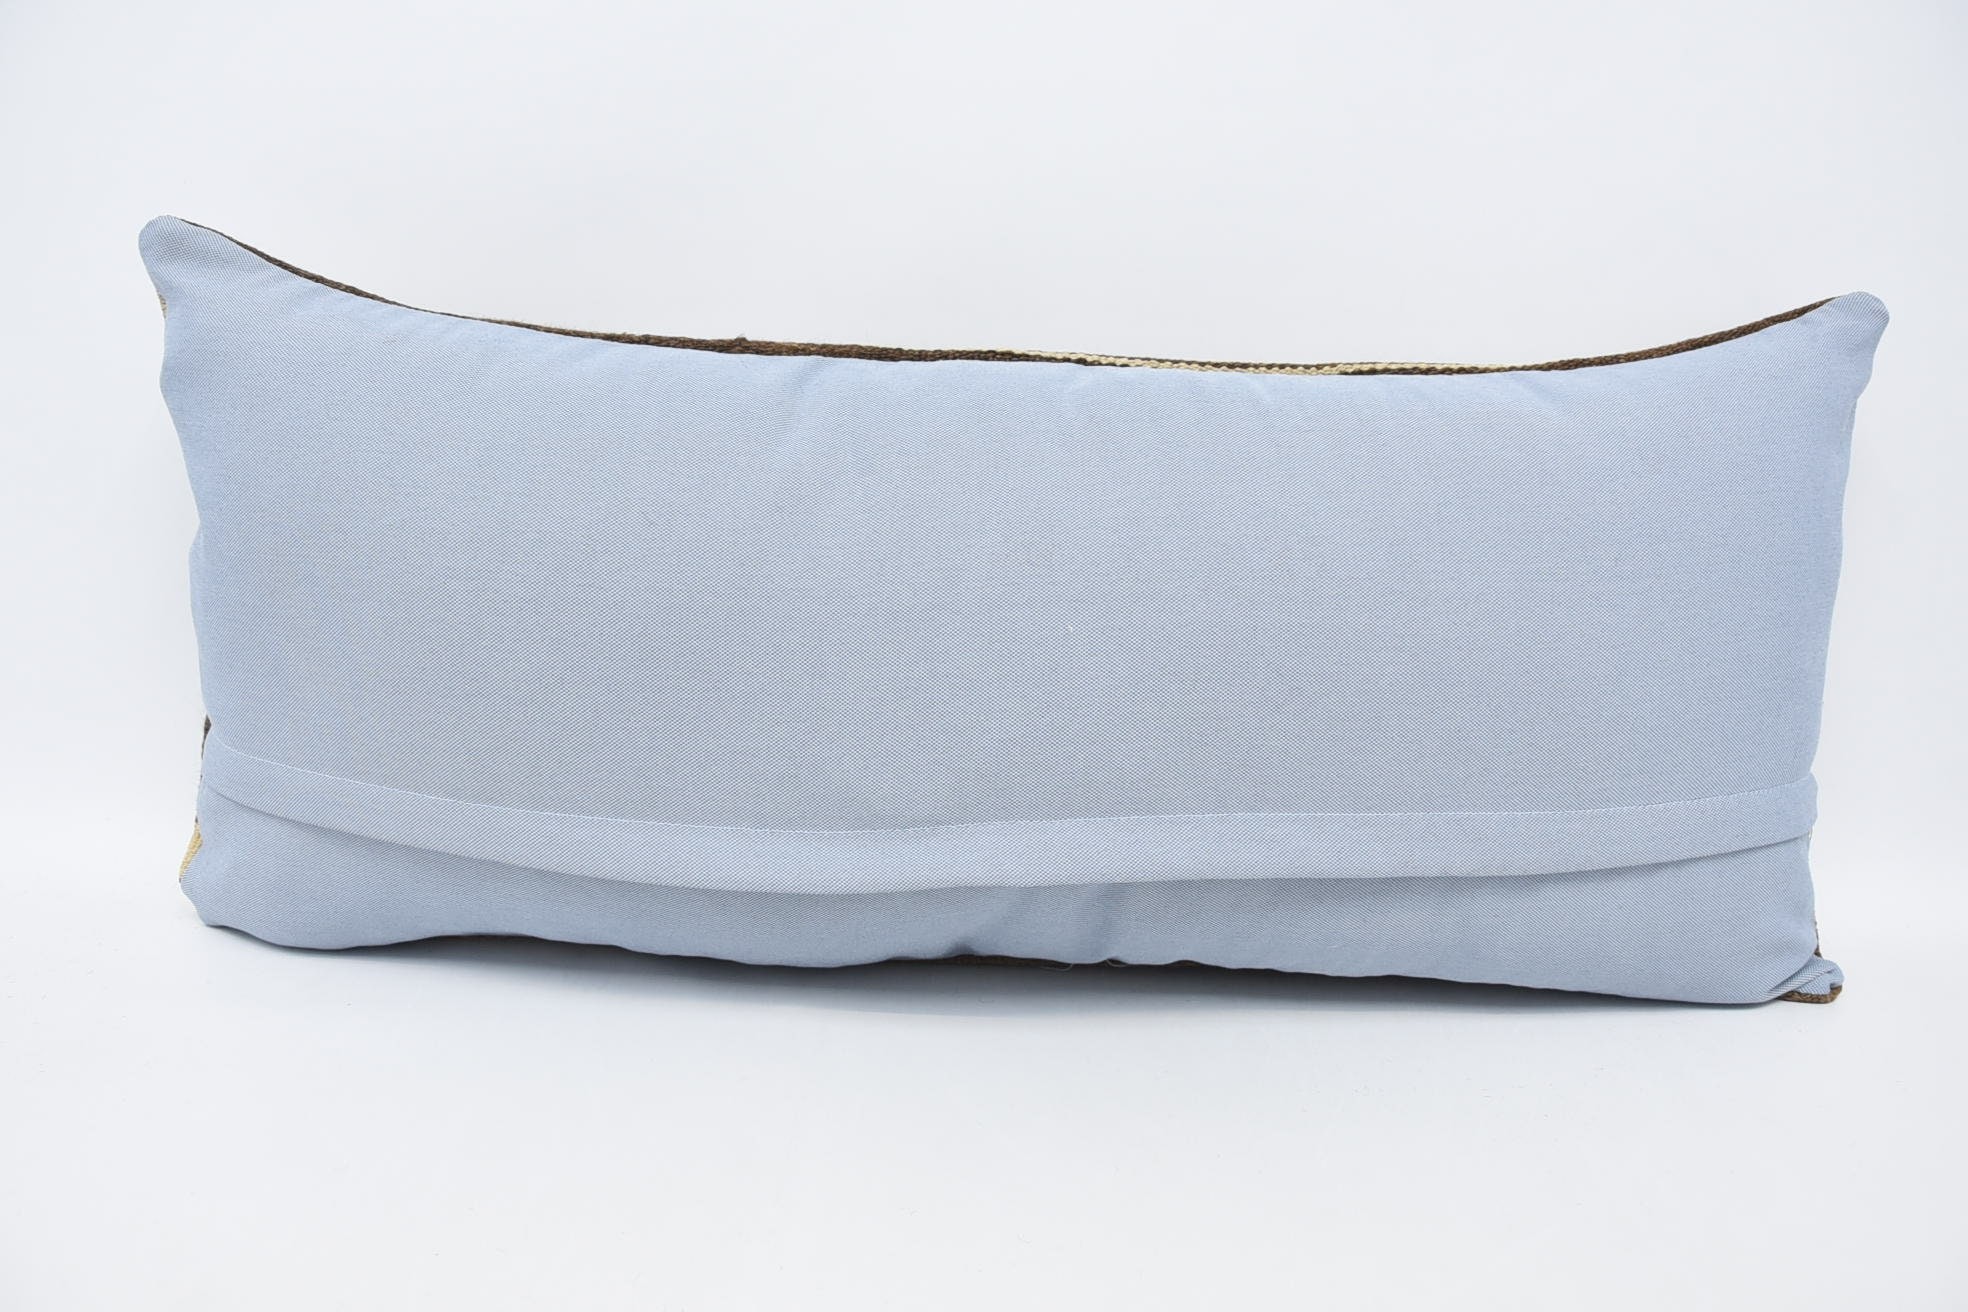 Kilim Pillow, 16"x36" Brown Pillow Cover, Cozy Throw Pillow Case, Home Decor Pillow, Meditation Pillow Cover, Handmade Kilim Cushion